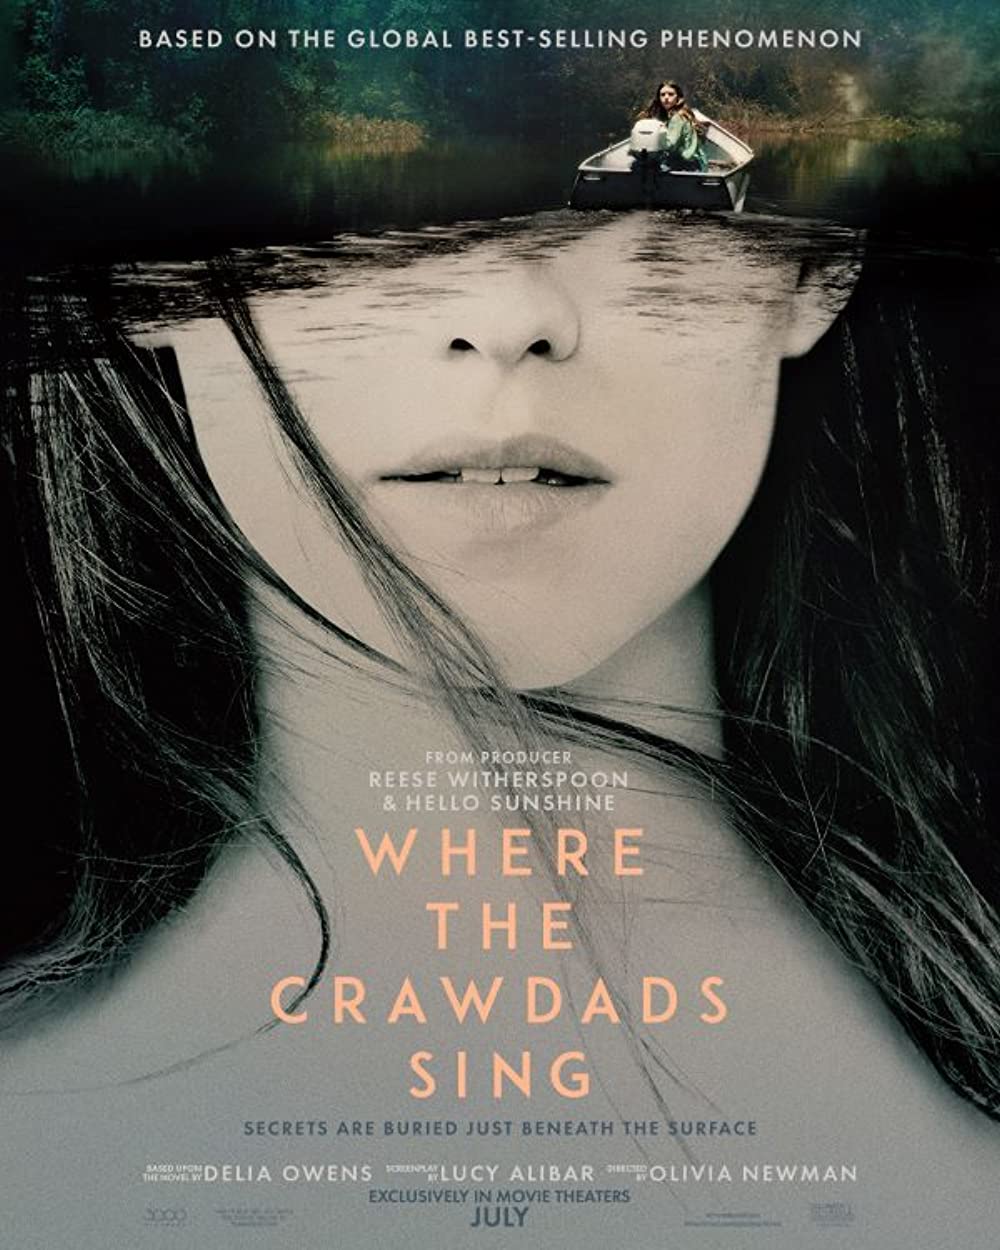 Where the Crawdads Sing (2022) 7:30 P.M. @ O'Brien Theatre in Renfrew